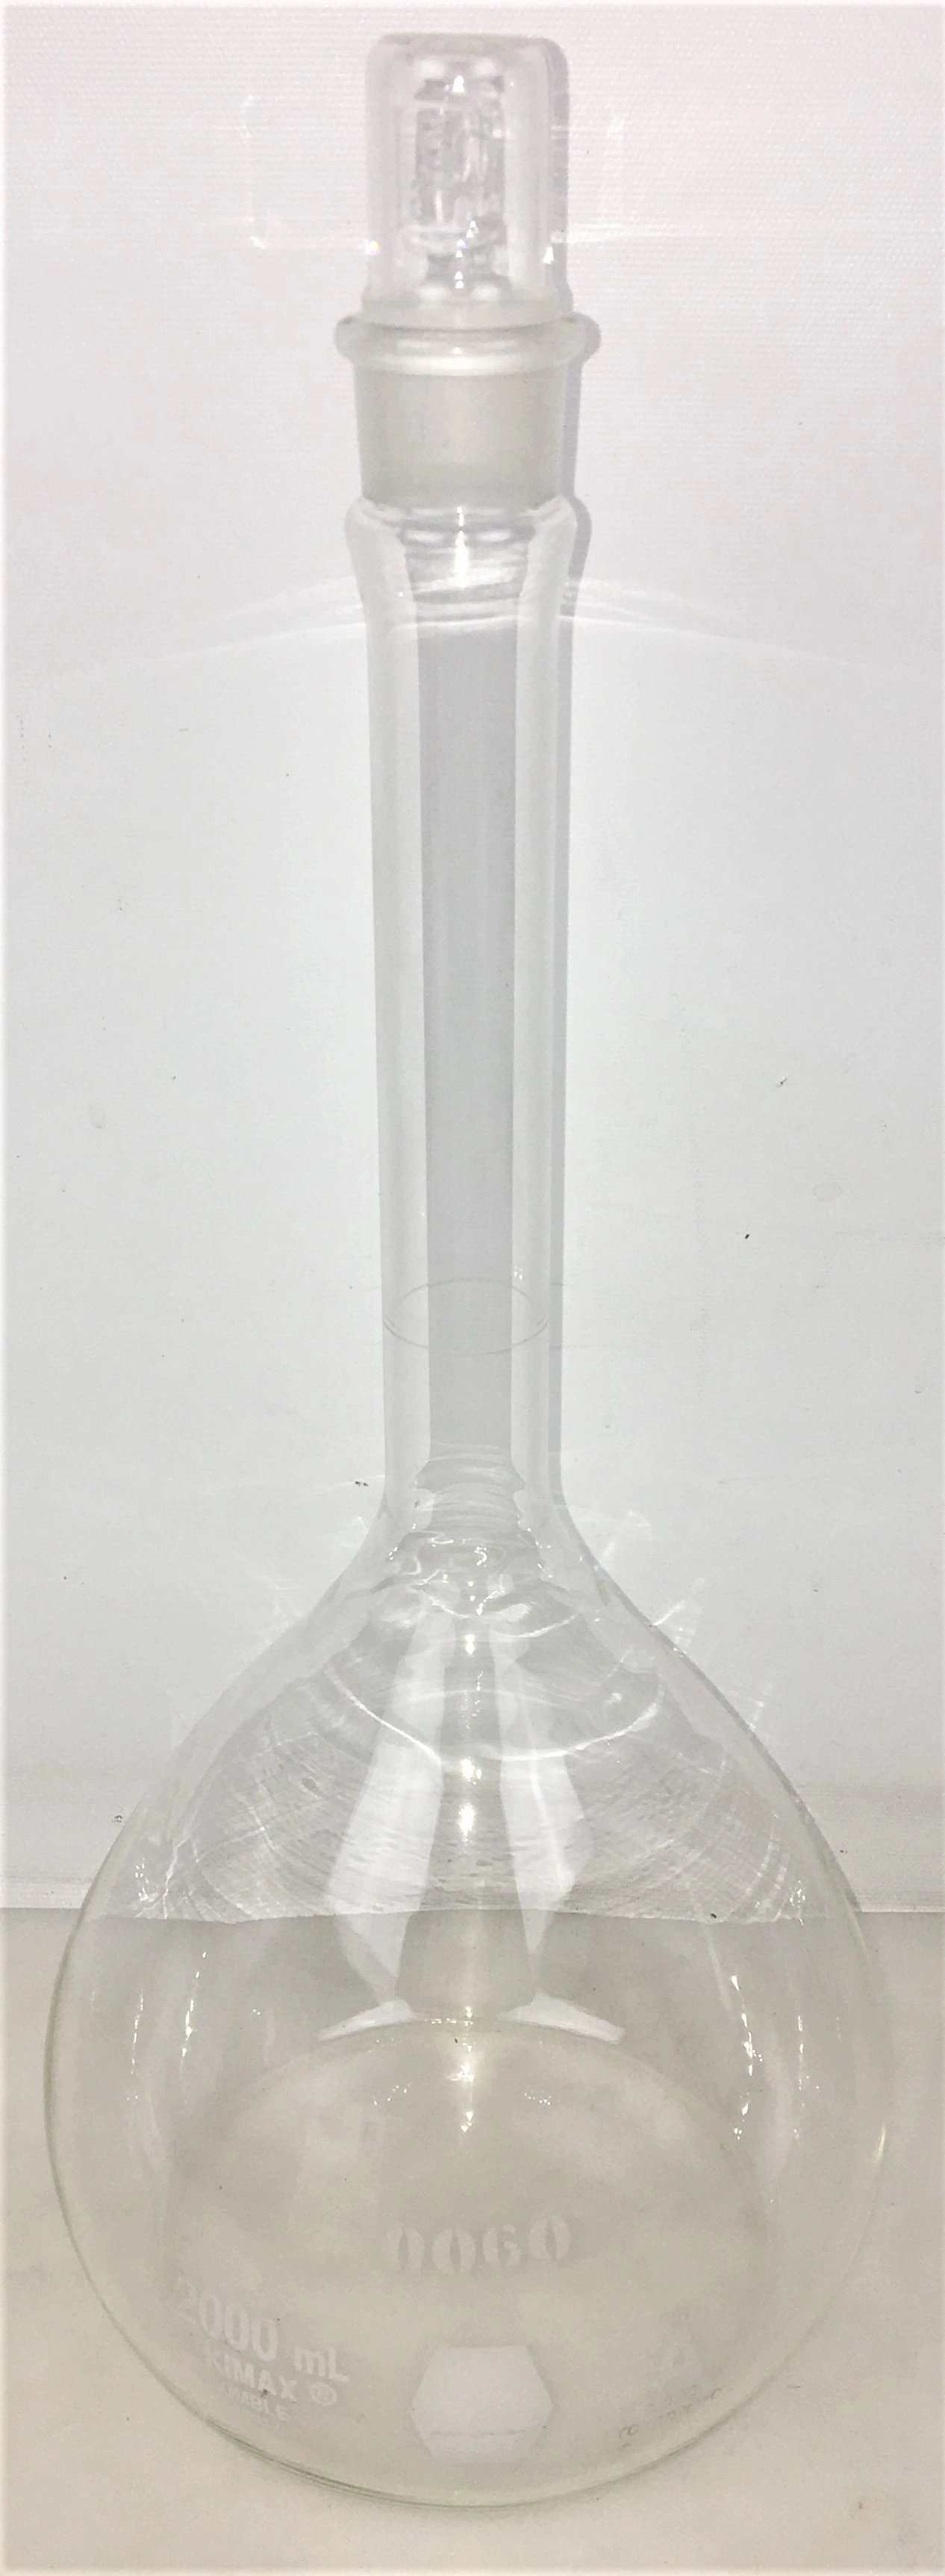 Kimble 28017-2000 KIMAX Volumetric Flask with Stopper, Class A - 2000mL